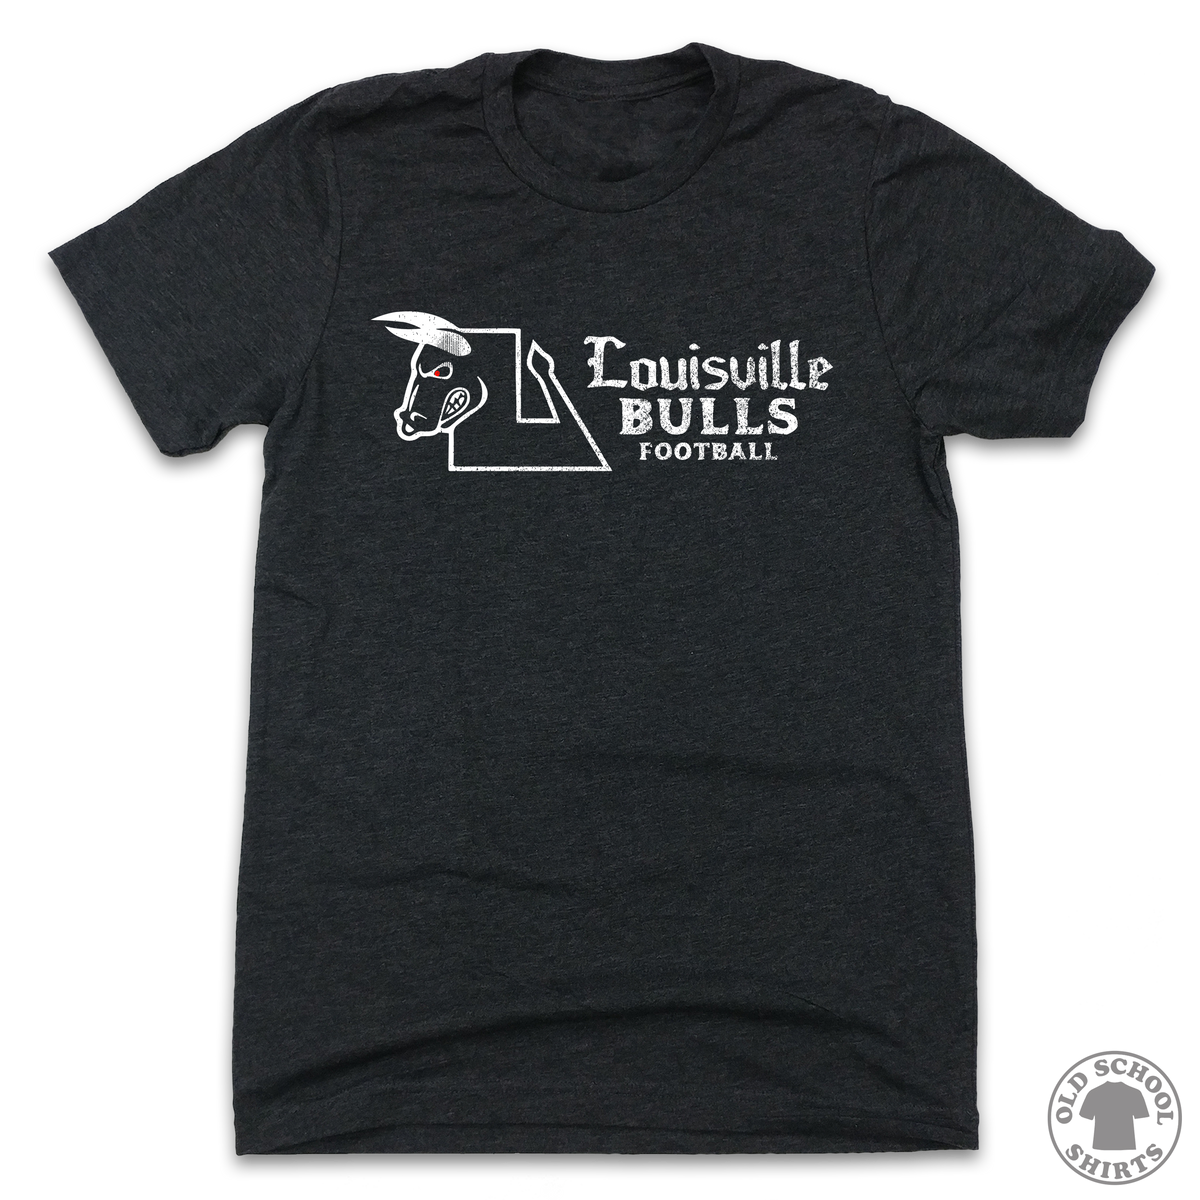 Louisville Bulls Football - Old School Shirts- Retro Sports T Shirts